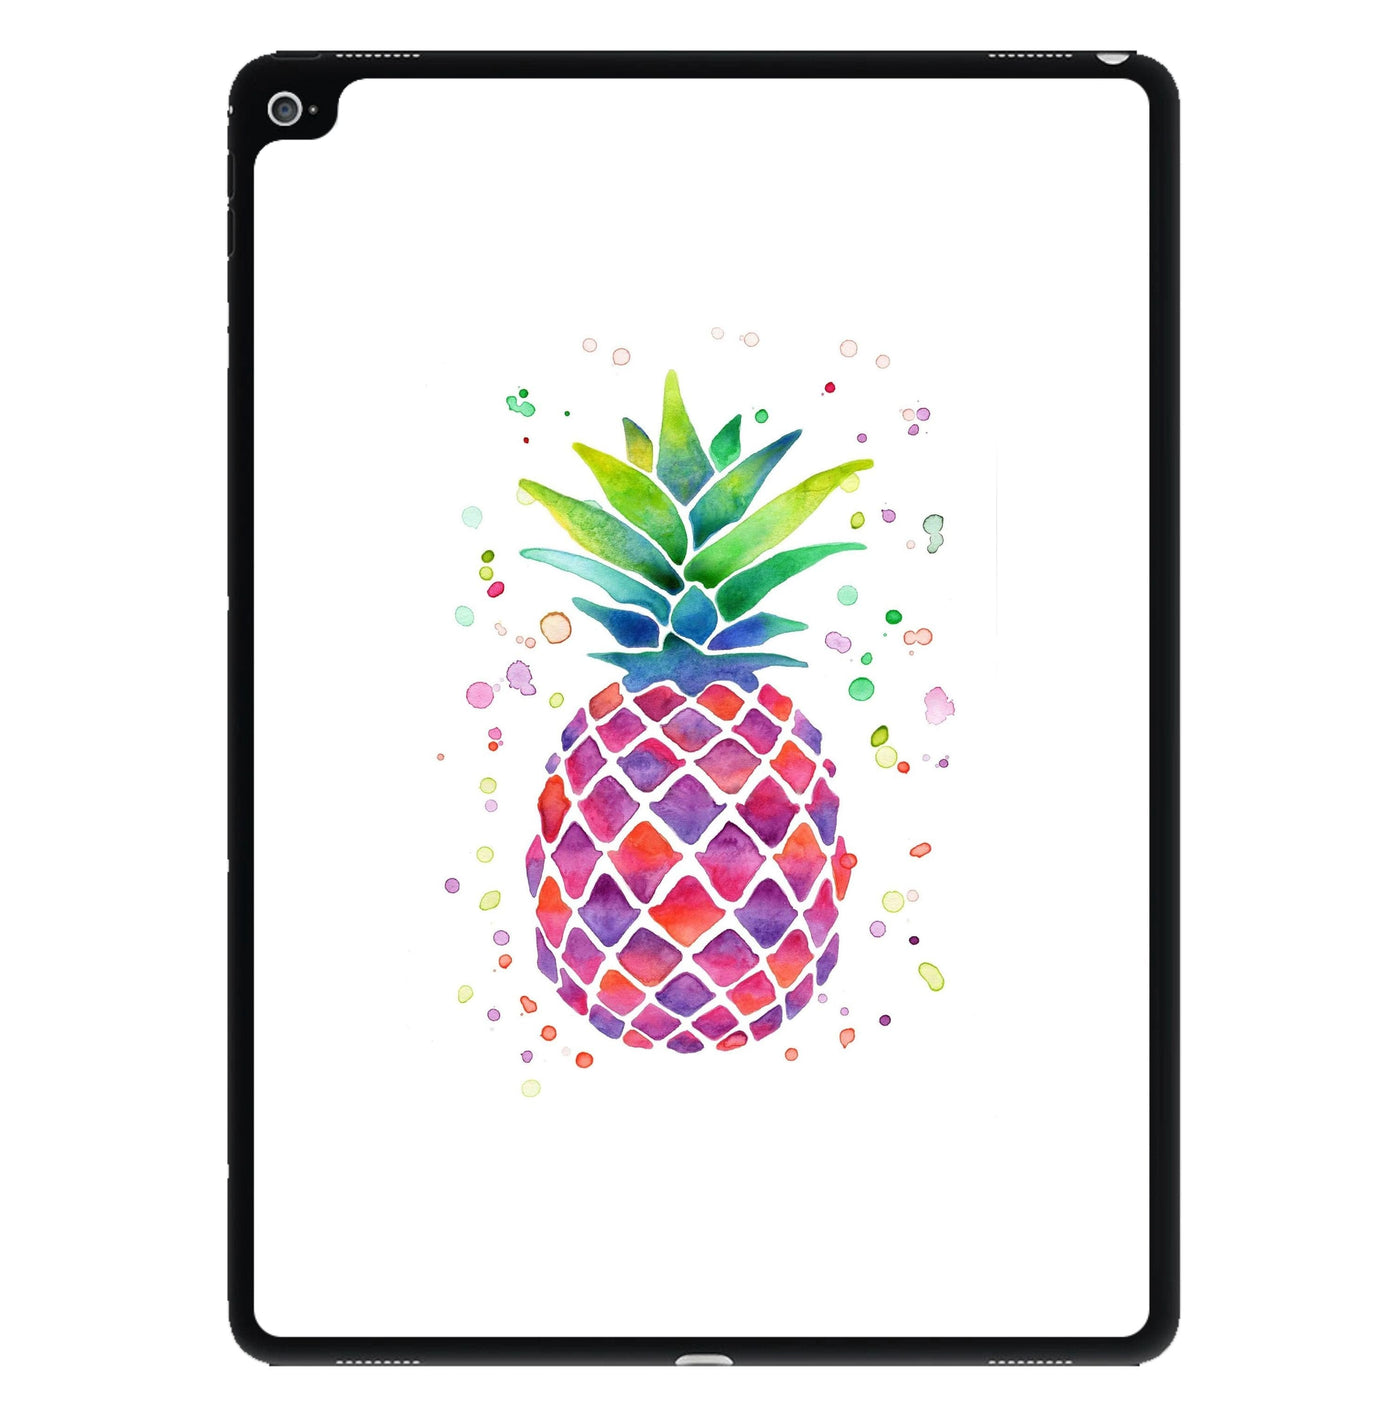 Watercolour Pineapple iPad Case